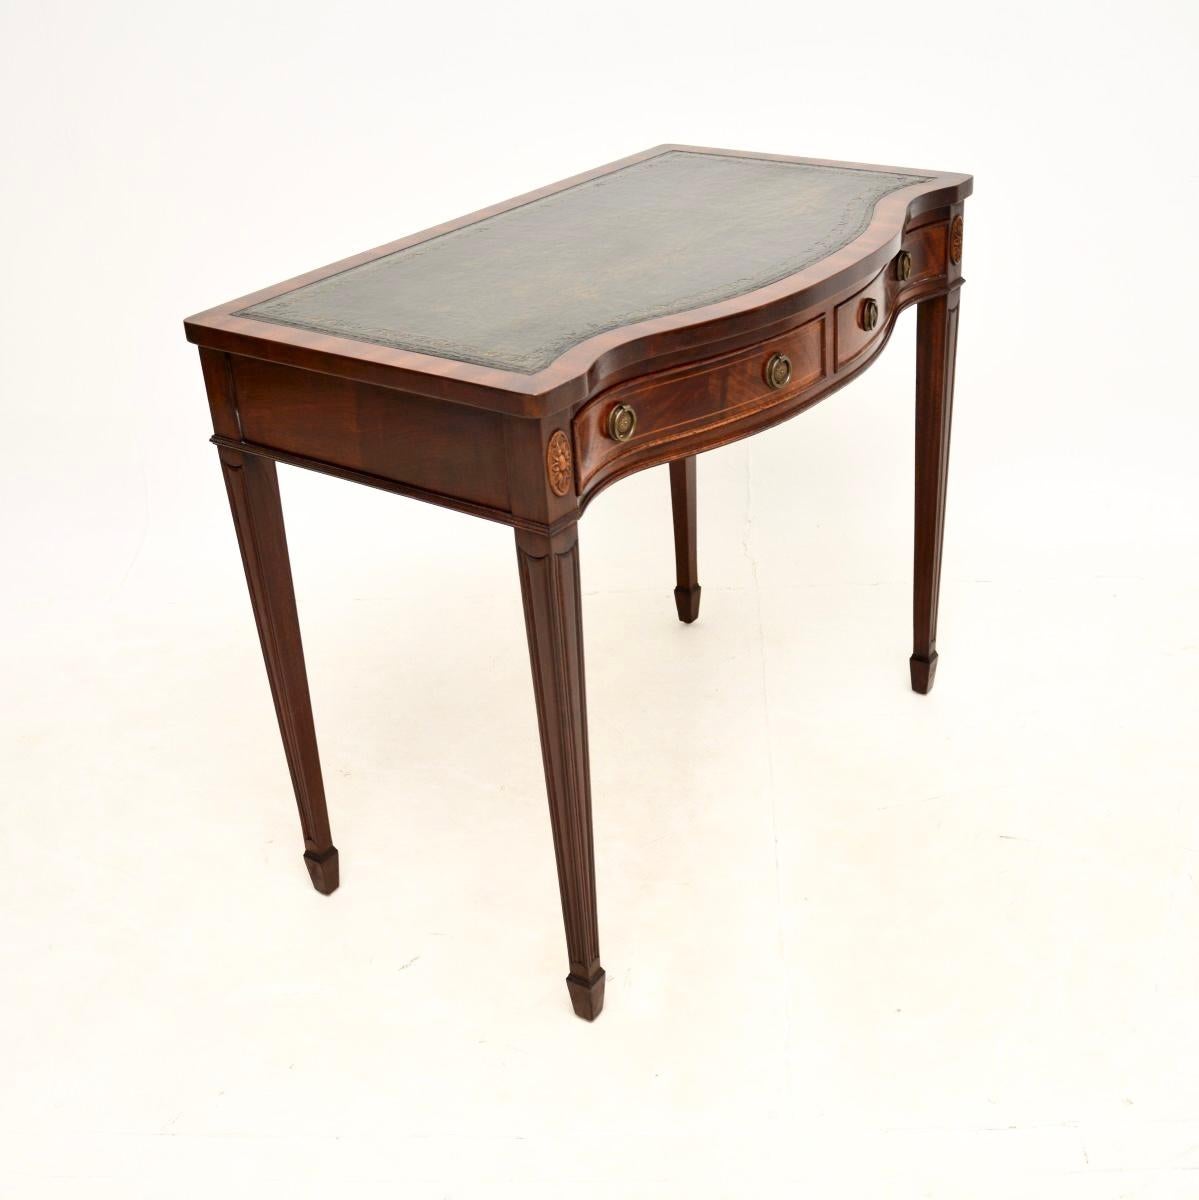 British Antique Leather Top Desk / Console Table